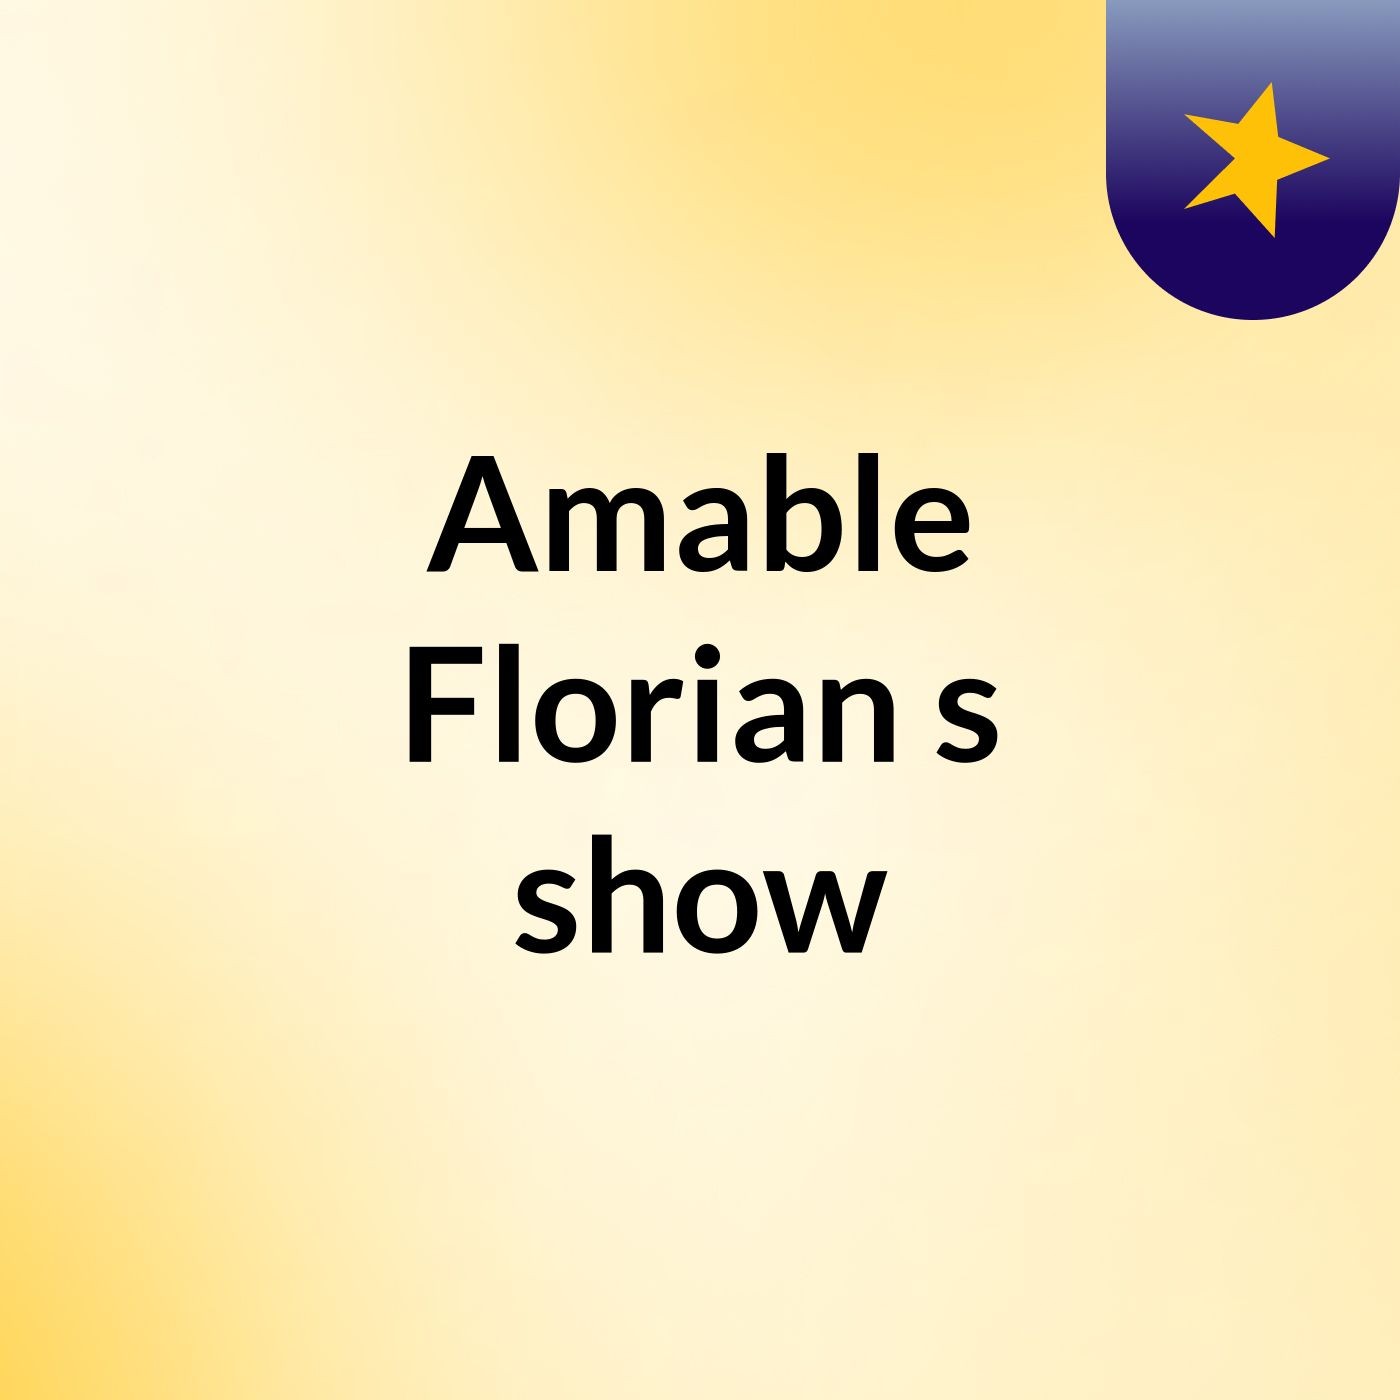 Amable Florian's show